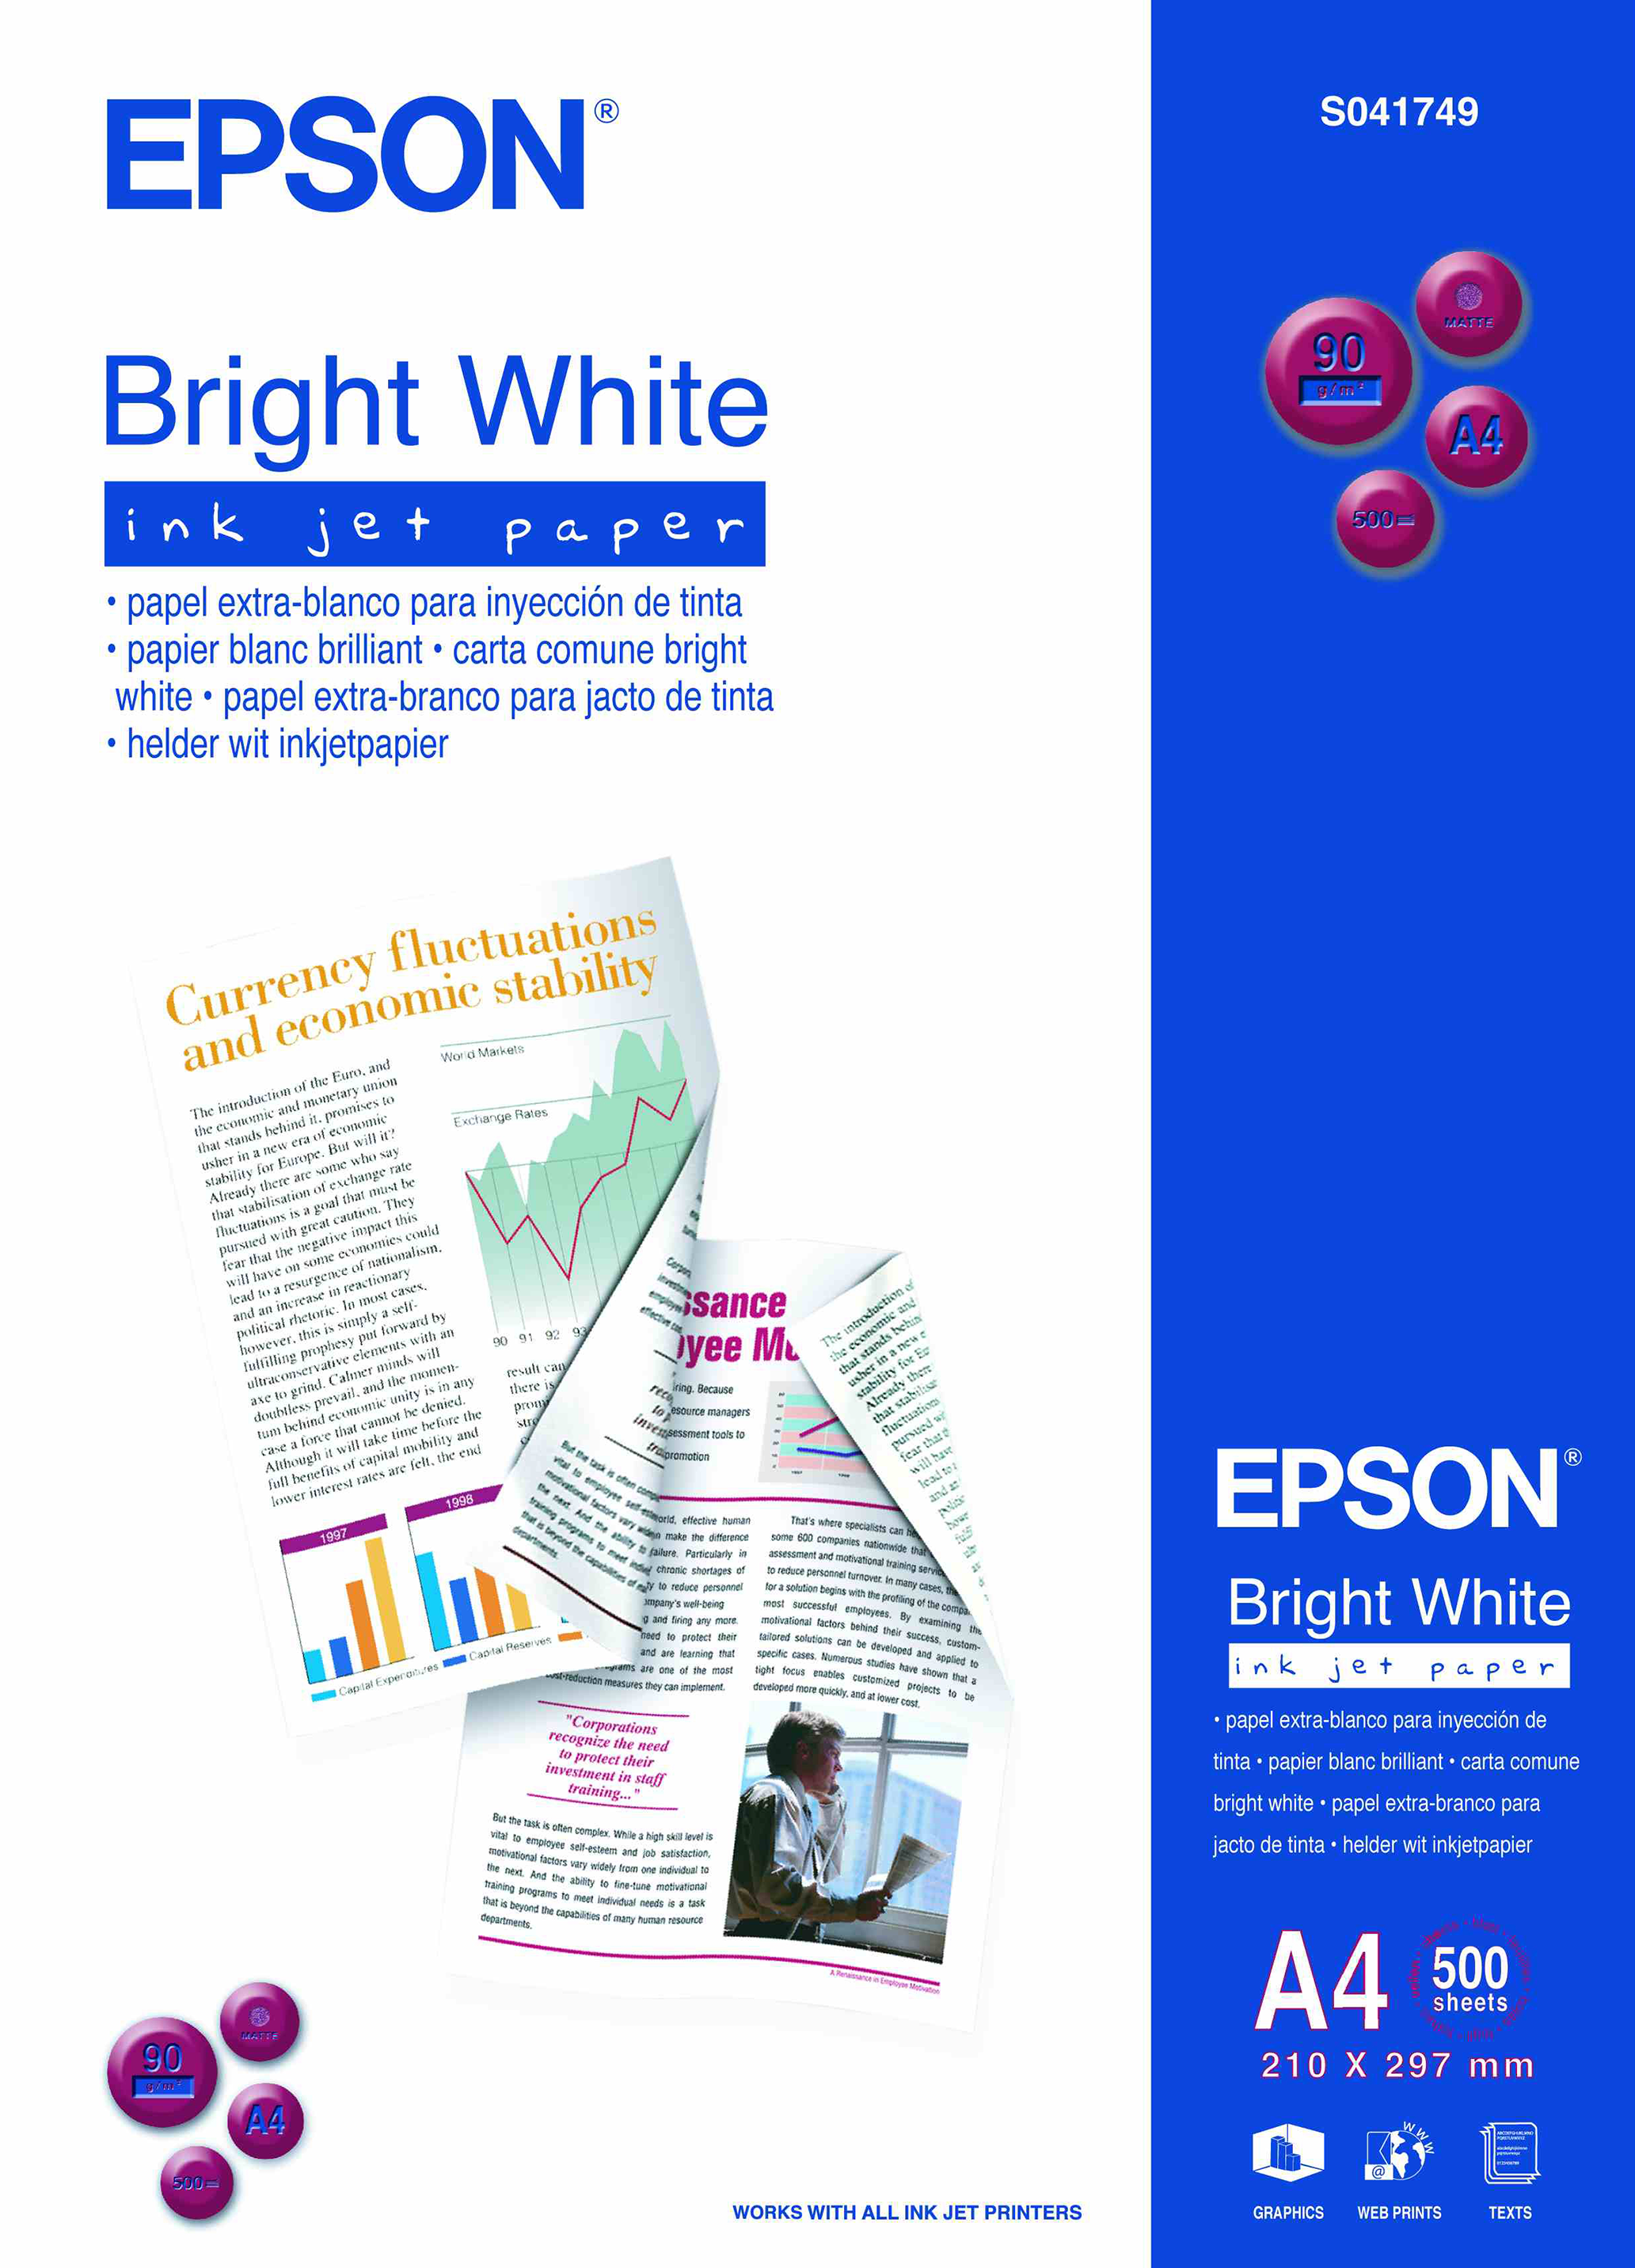 Epson C13S041749 Bright White Paper A4 500 Sheets